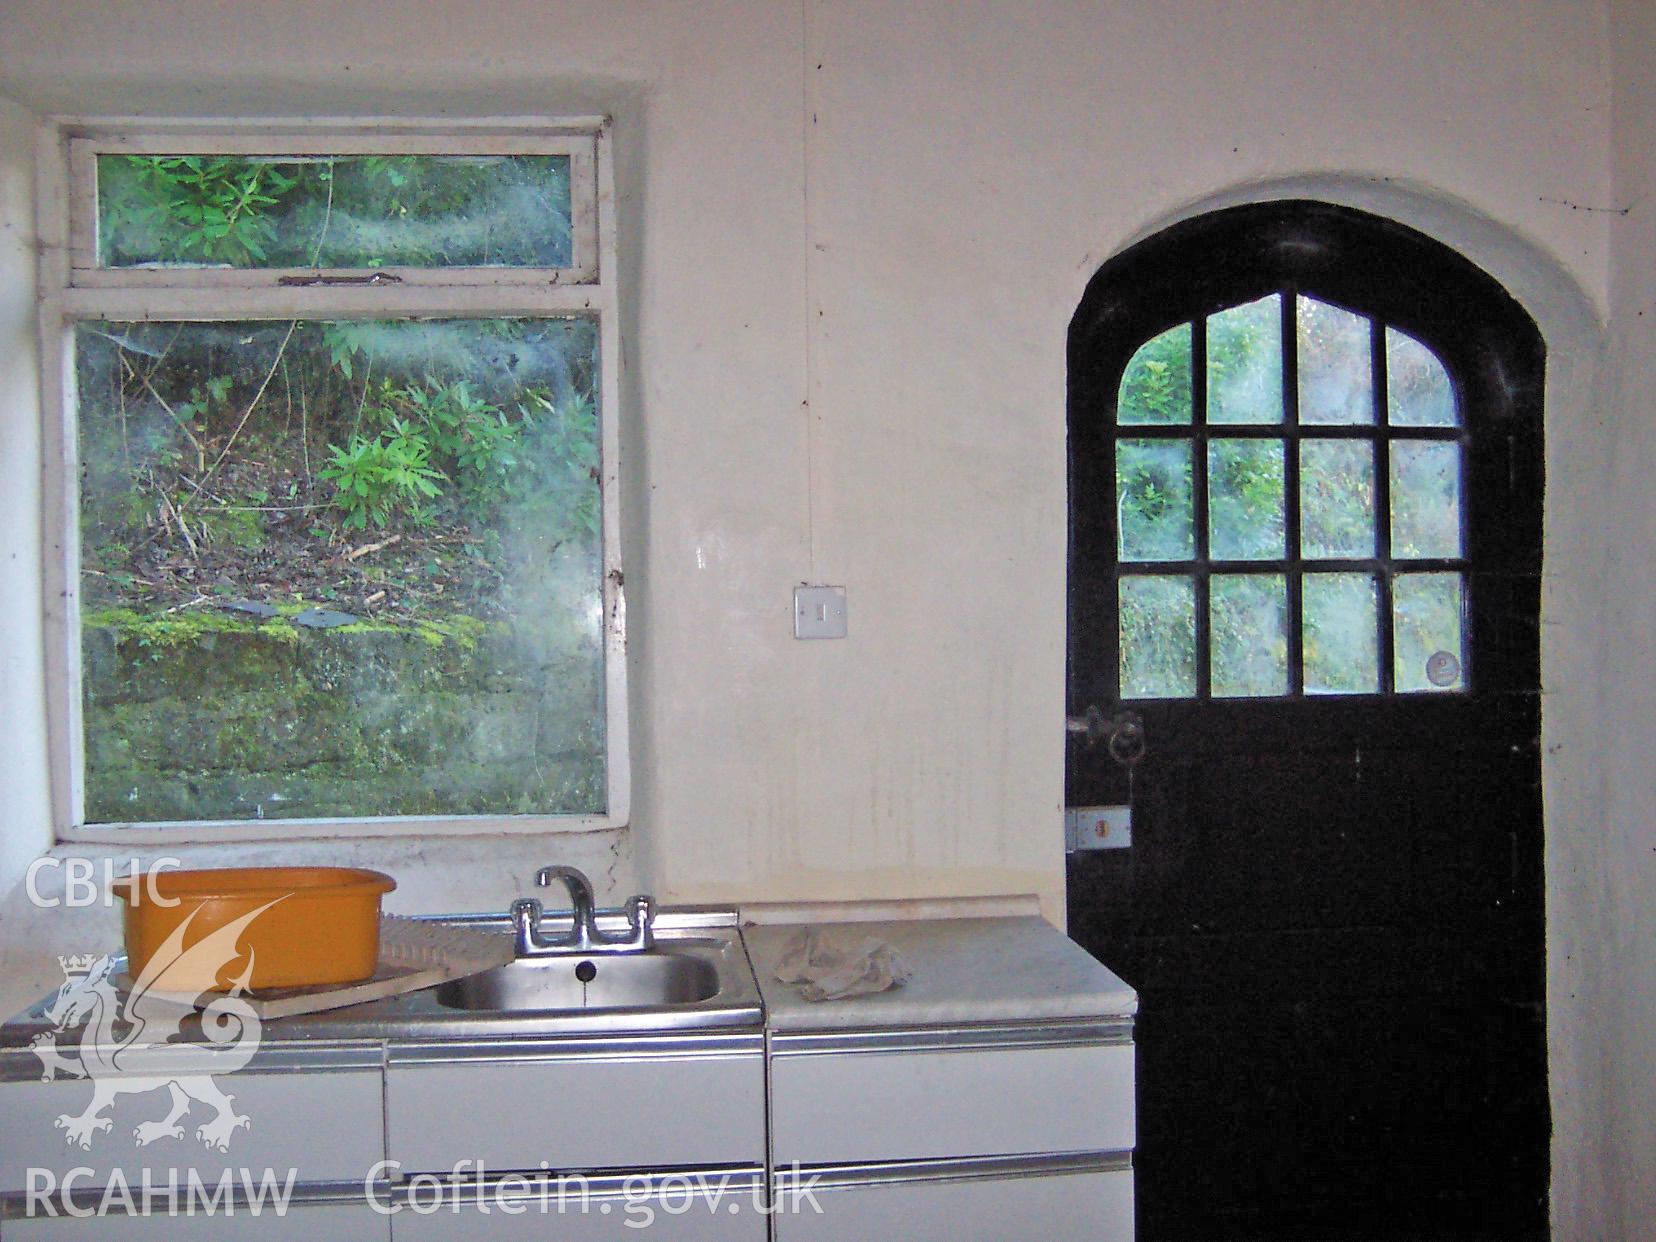 Colour digital photograph of the kitchen door.